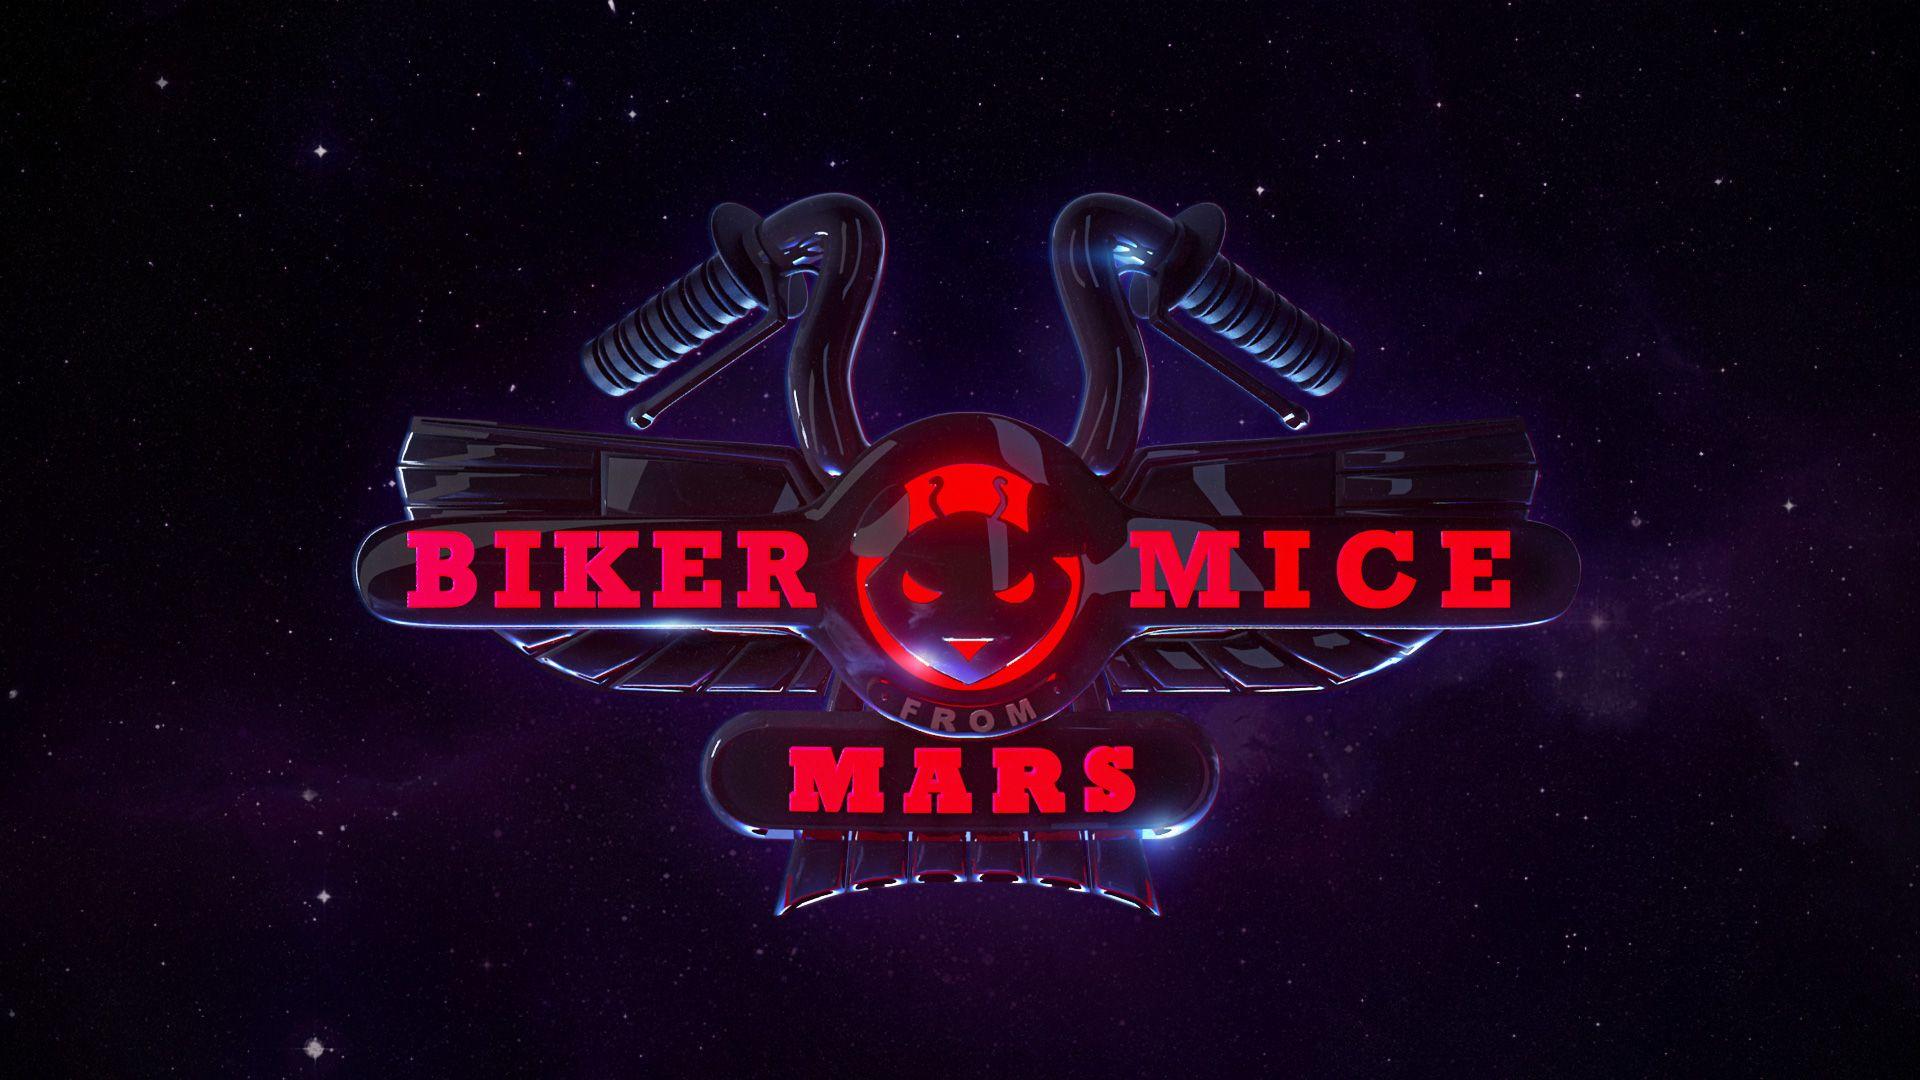 Mice Logo - I made my own 3D version of the Biker Mice logo! : 90scartoons